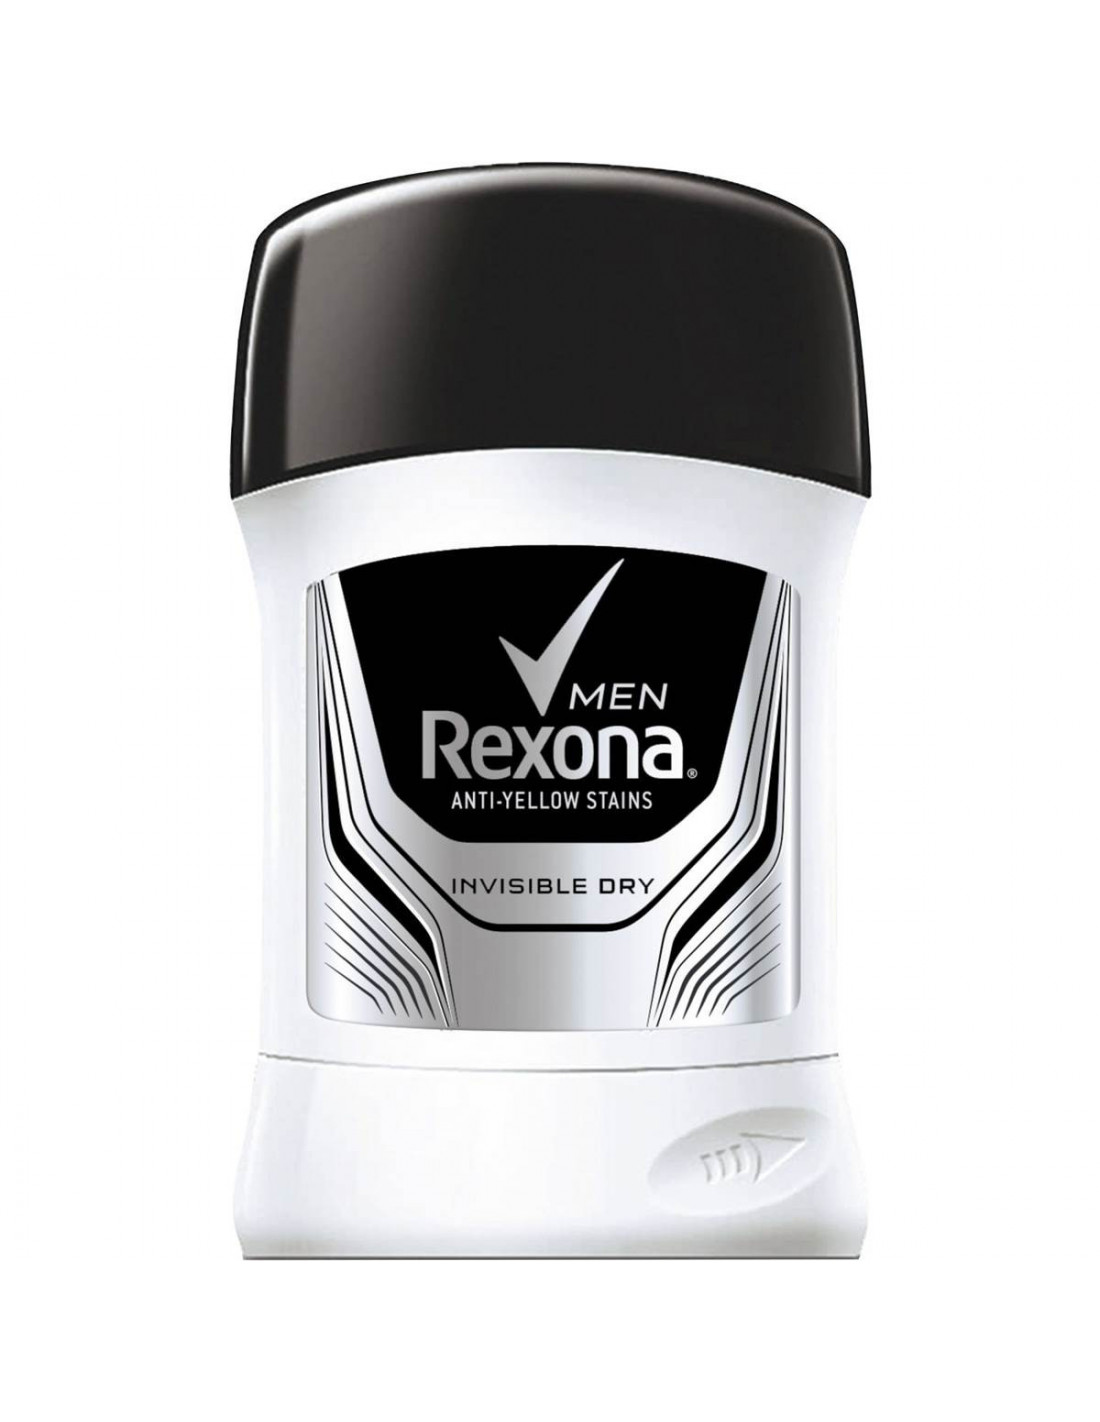 Rexona Deodorant Stick Dry 52g | Ally's Basket - Dire...